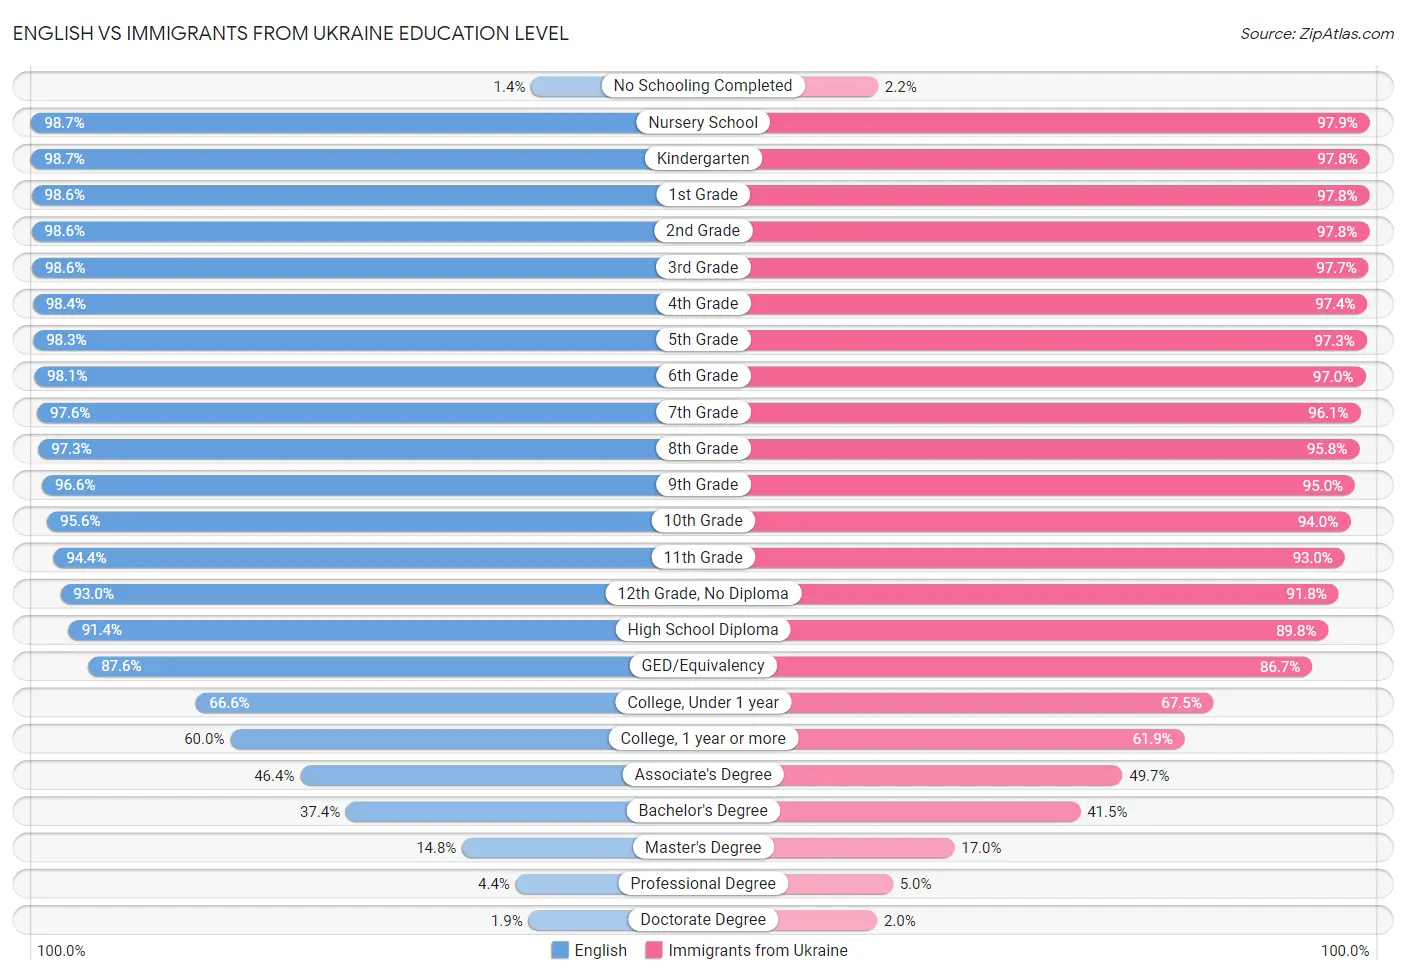 English vs Immigrants from Ukraine Education Level